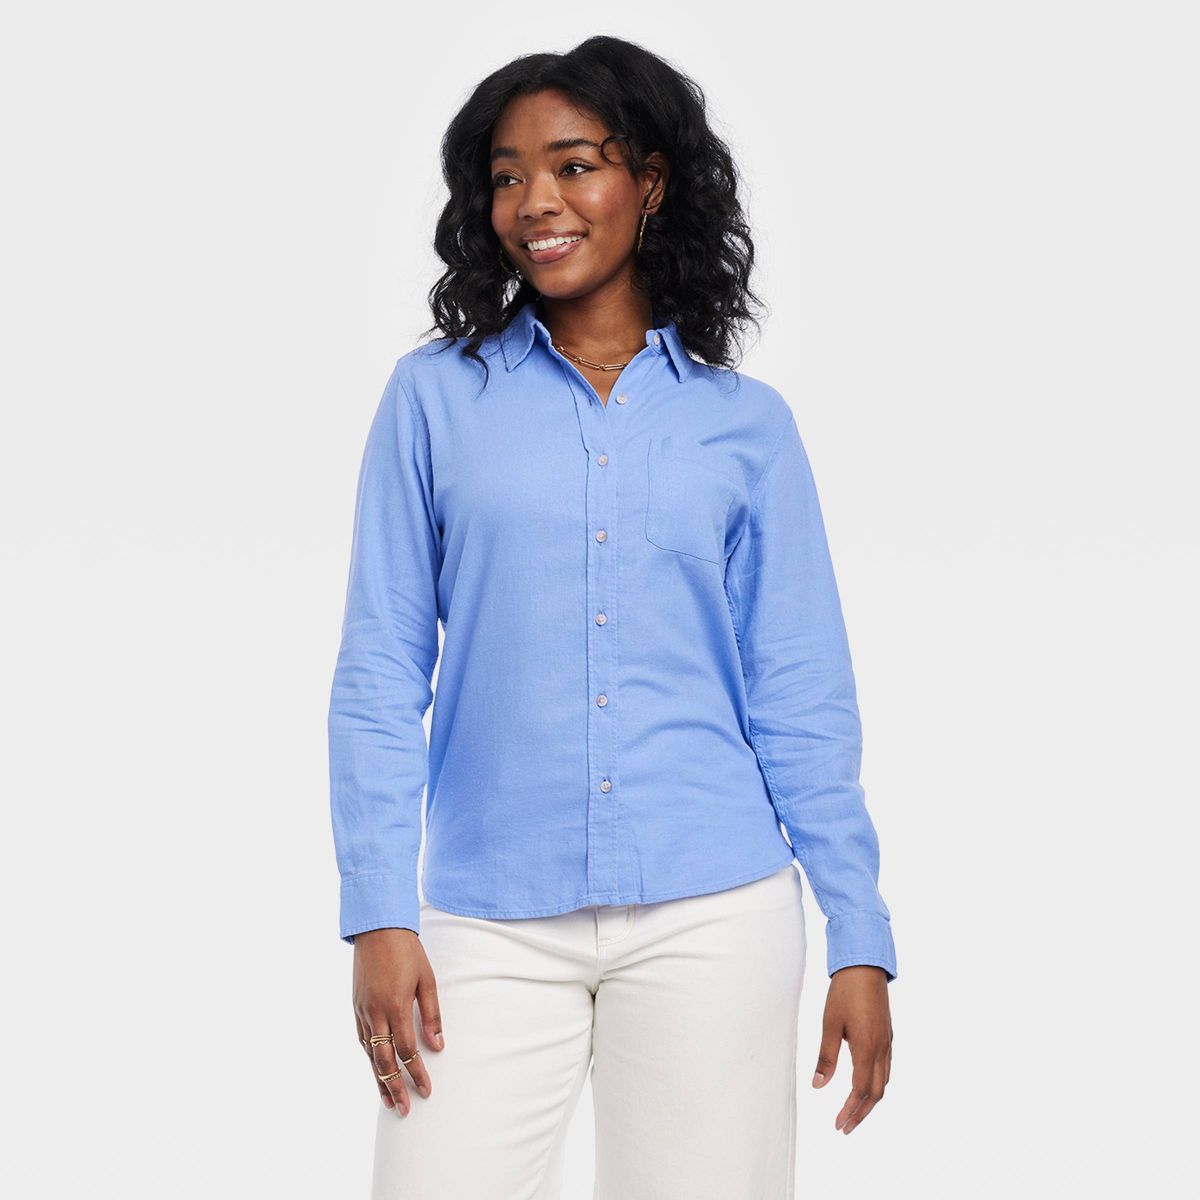 Women's Linen Long Sleeve Collared Button-Down Shirt - Universal Thread™ Pink Striped XS | Target